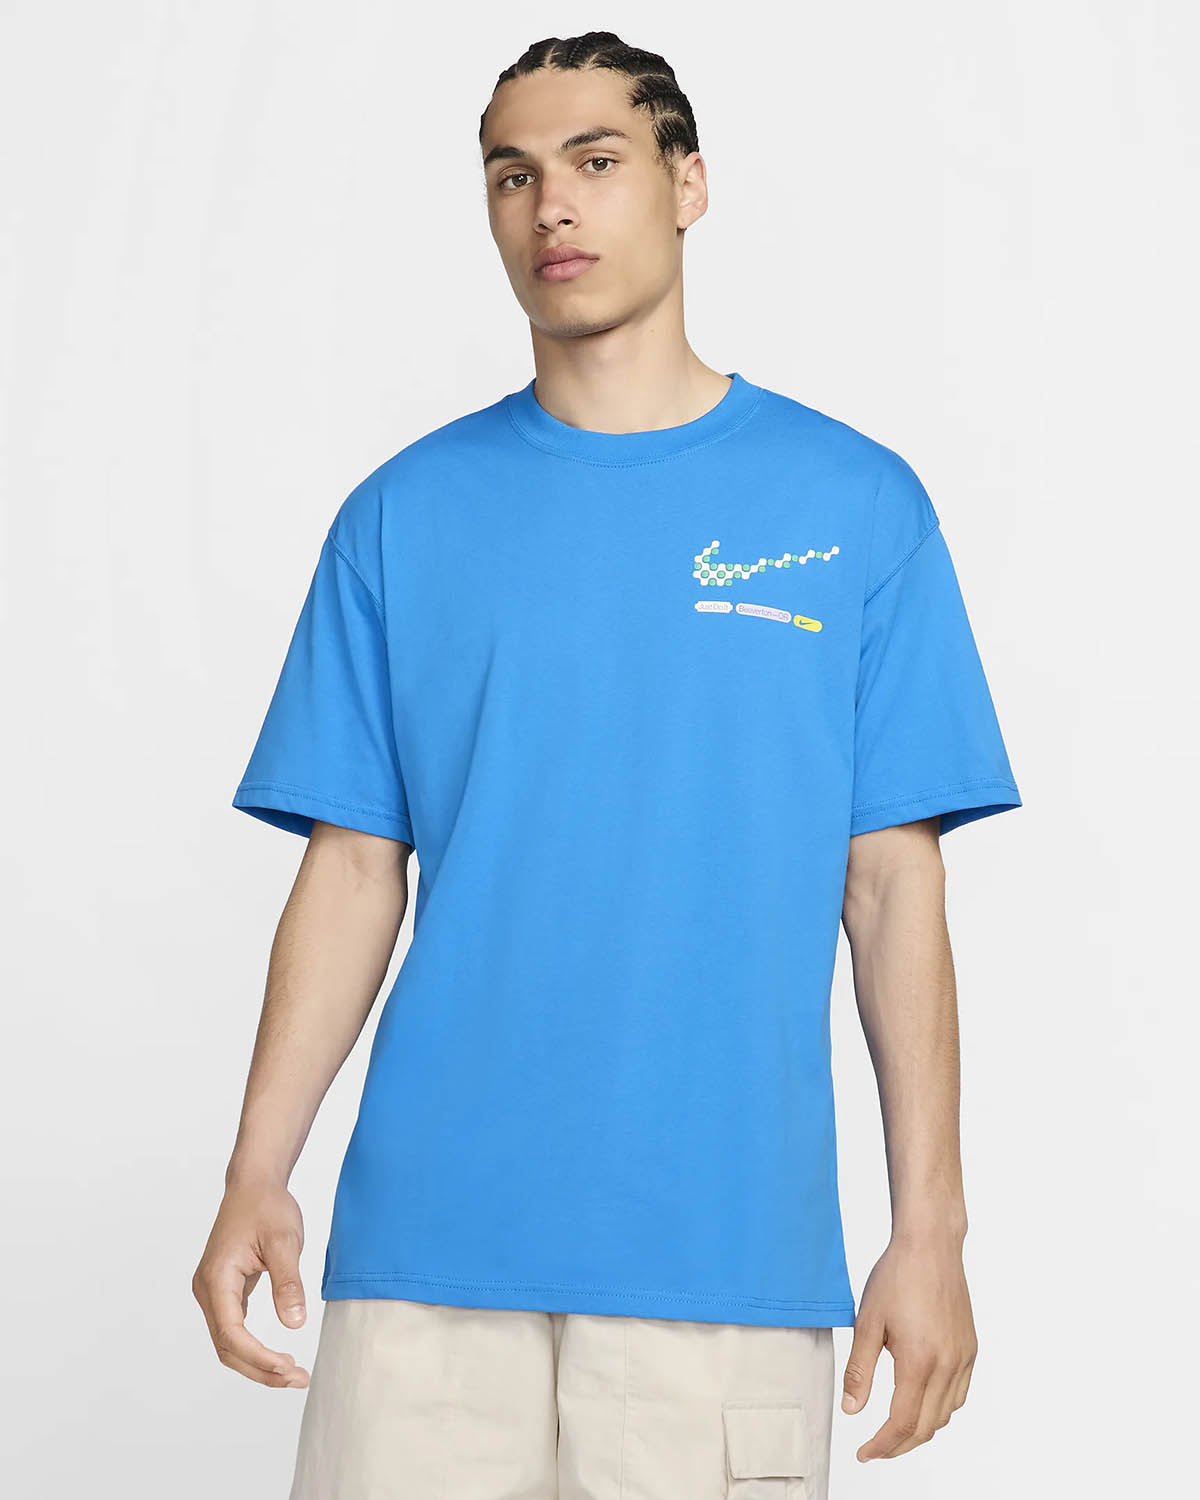 Nike Sportswear Light Photo Blue T Shirt 1